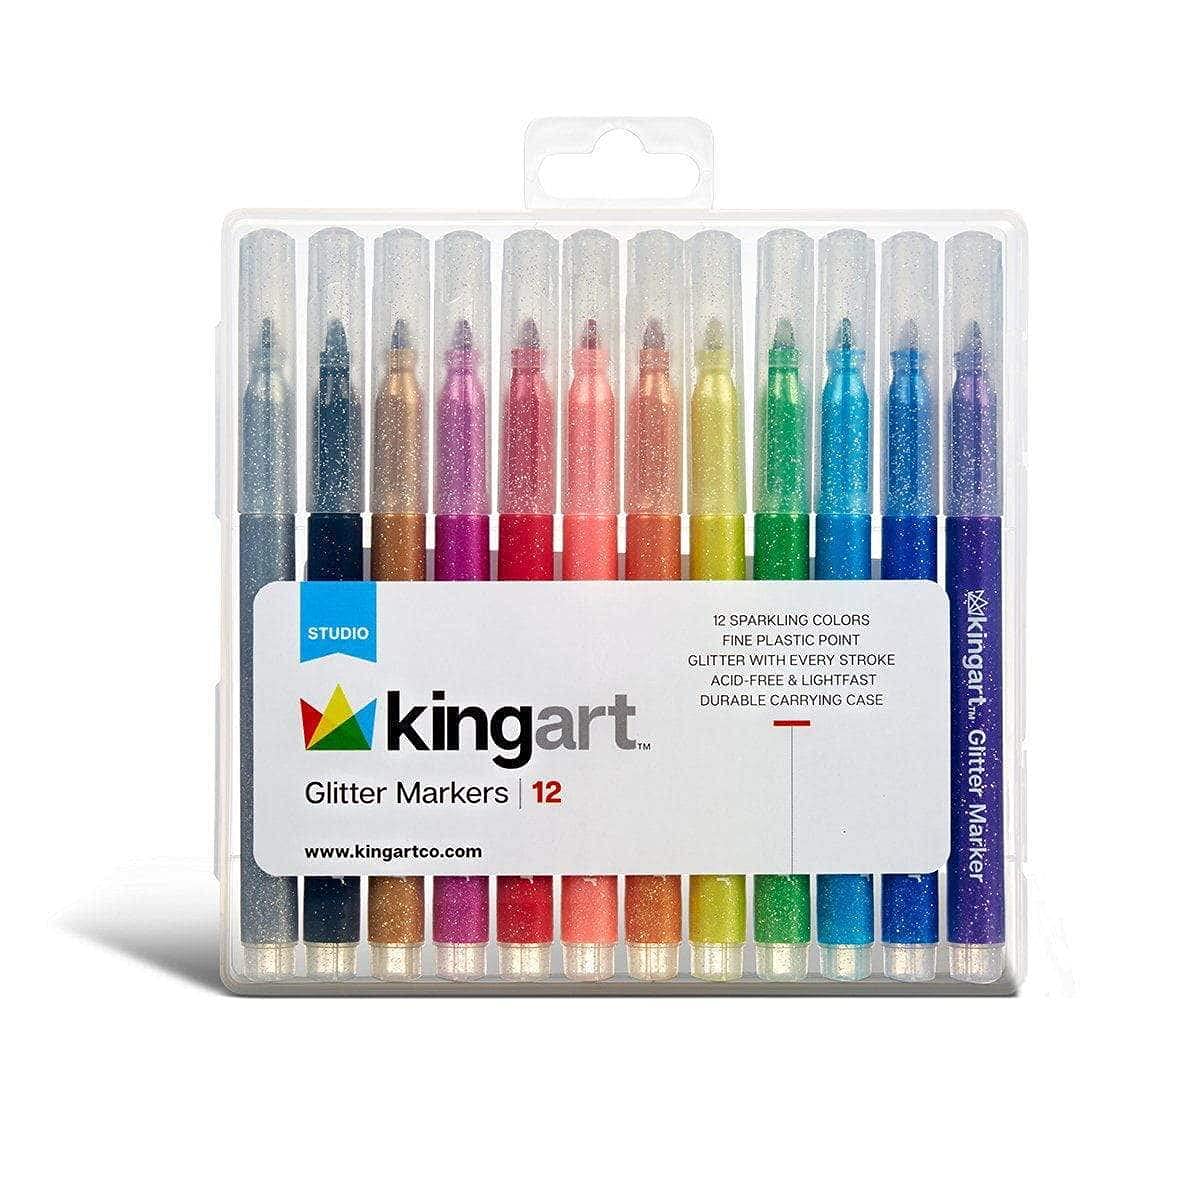 KINGART Watercolor Brush Markers, 36 Piece, Multicolor, 410-36